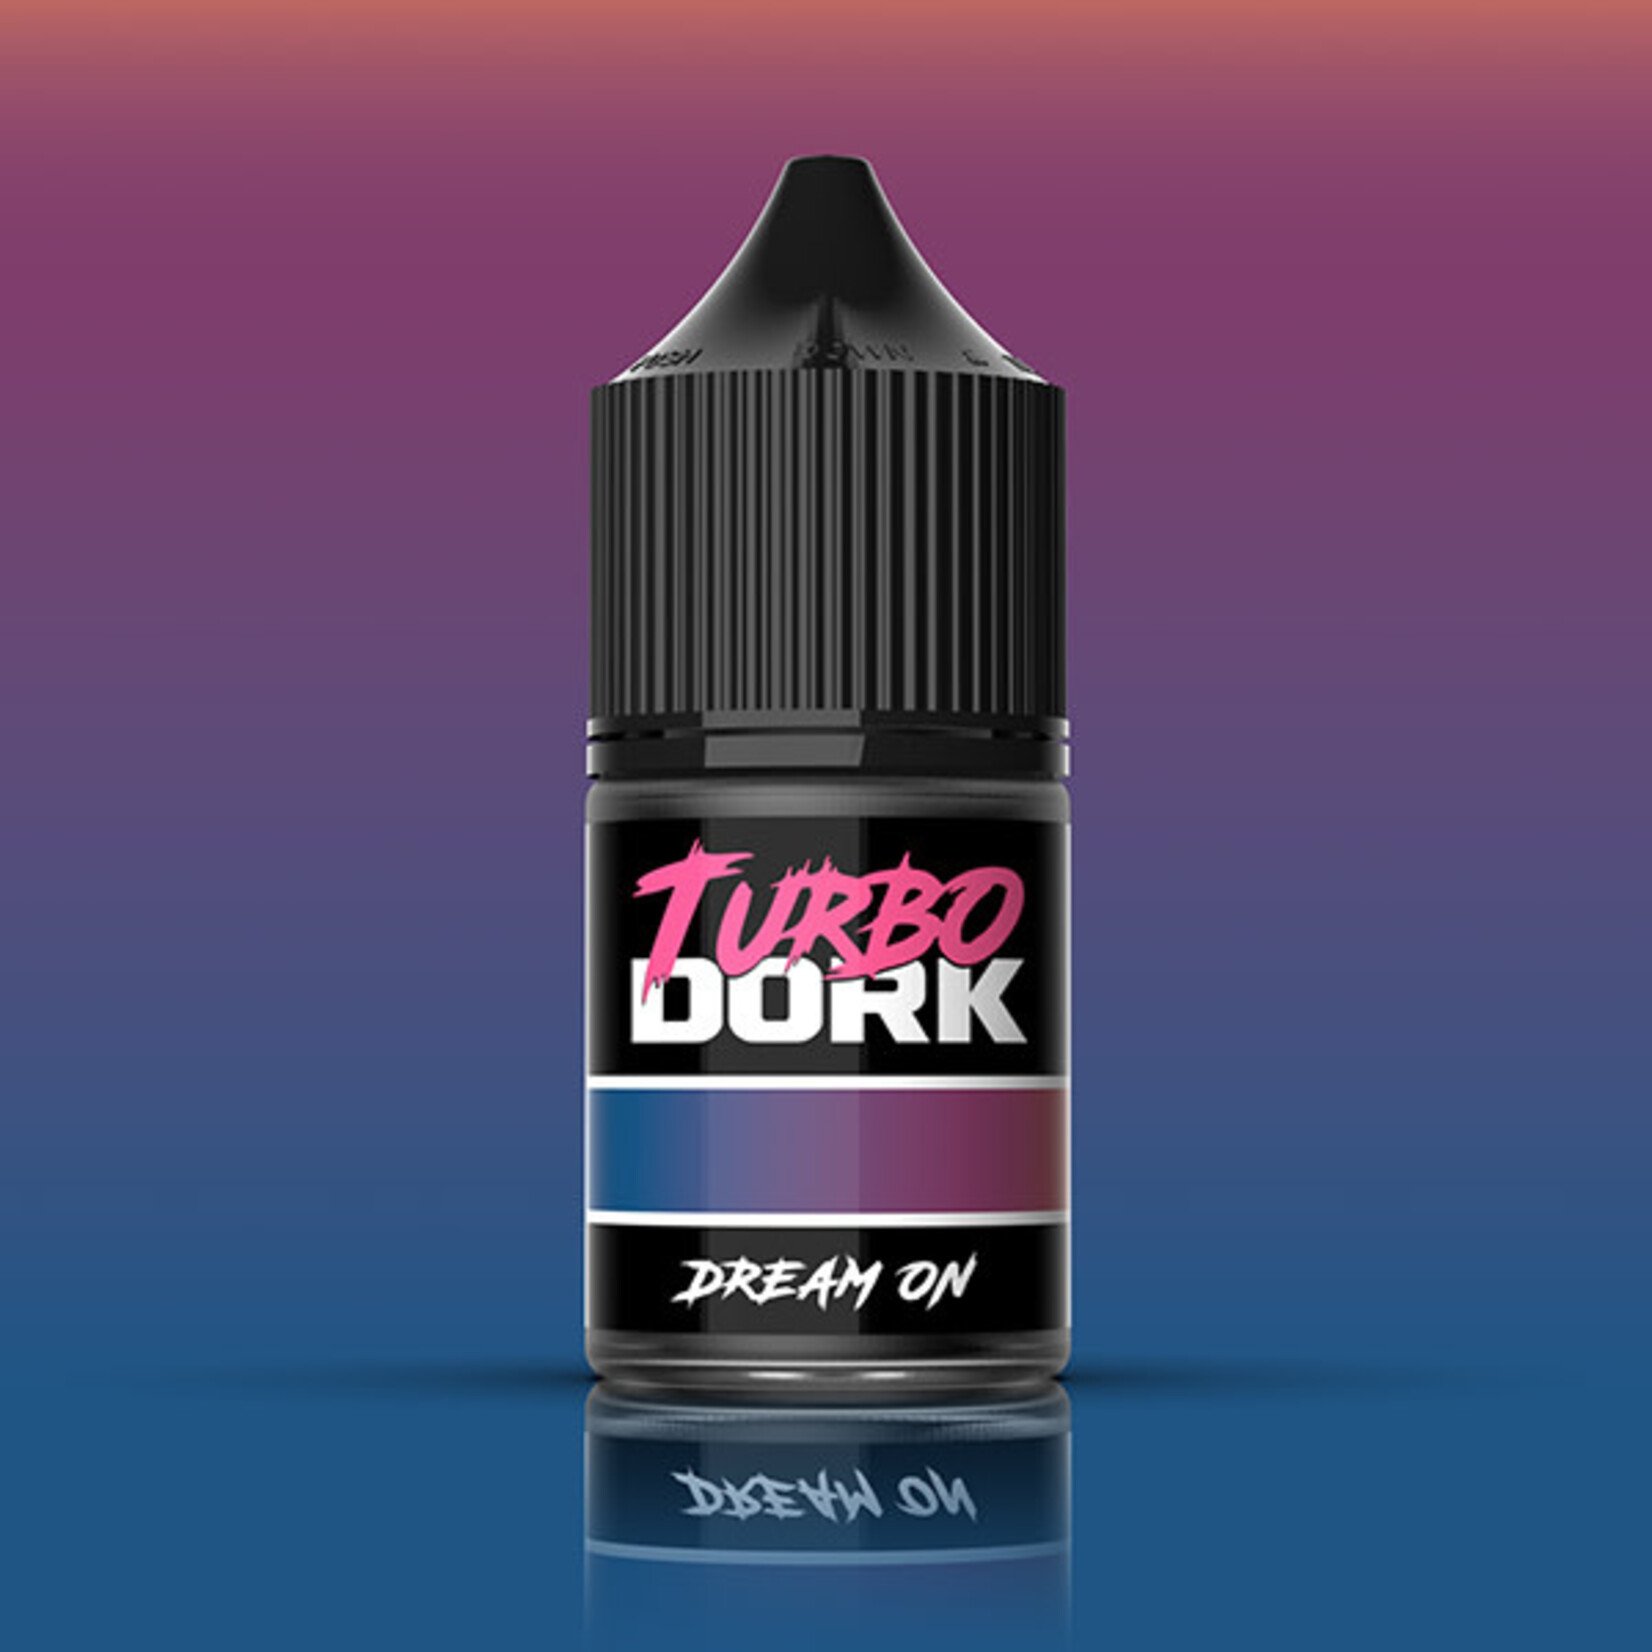 Turbo Dork Turboshift Acrylic Paint - Dream On